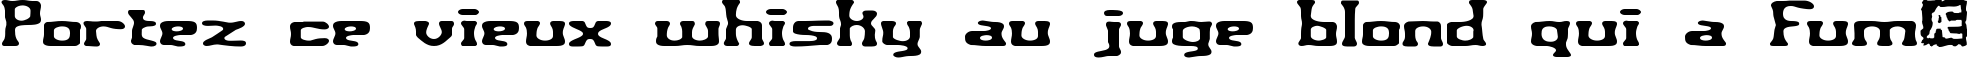 Пример написания шрифтом Aspartame BRK текста на французском